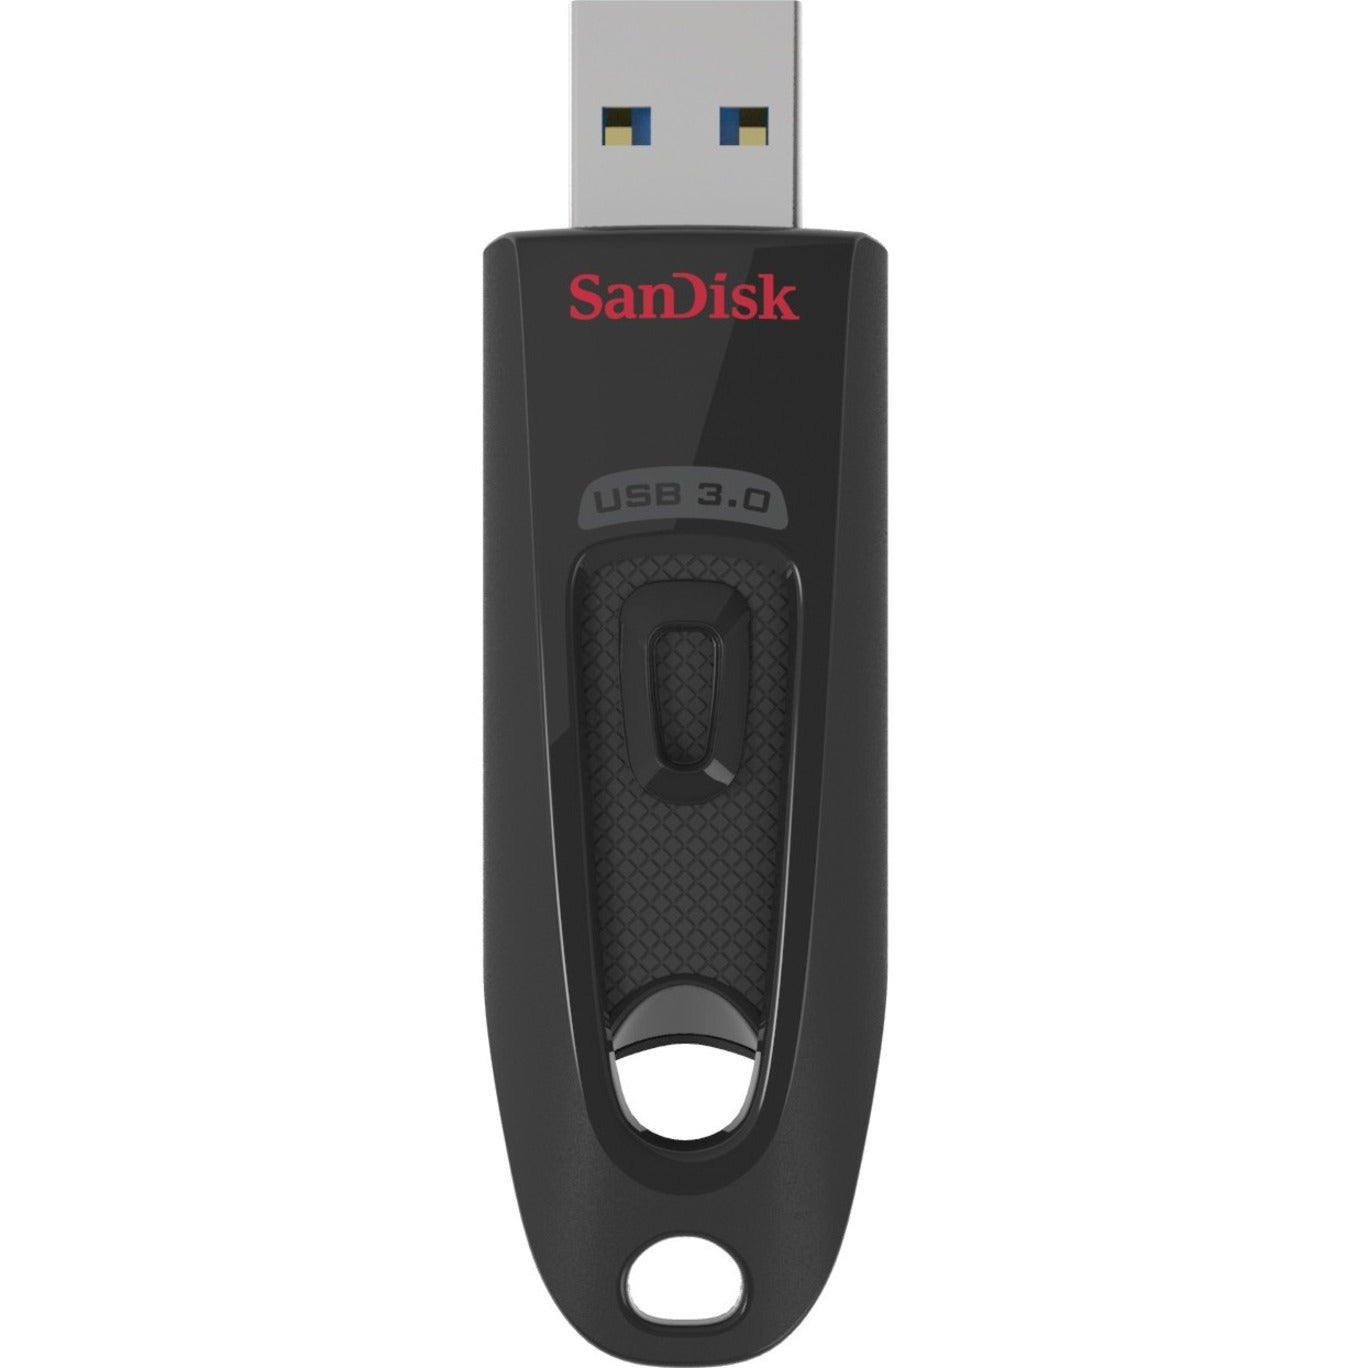 SanDisk SDCZ48-032G-AW46 32GB Ultra USB 3.0 Flash Drive, 5 Year Warranty, Black